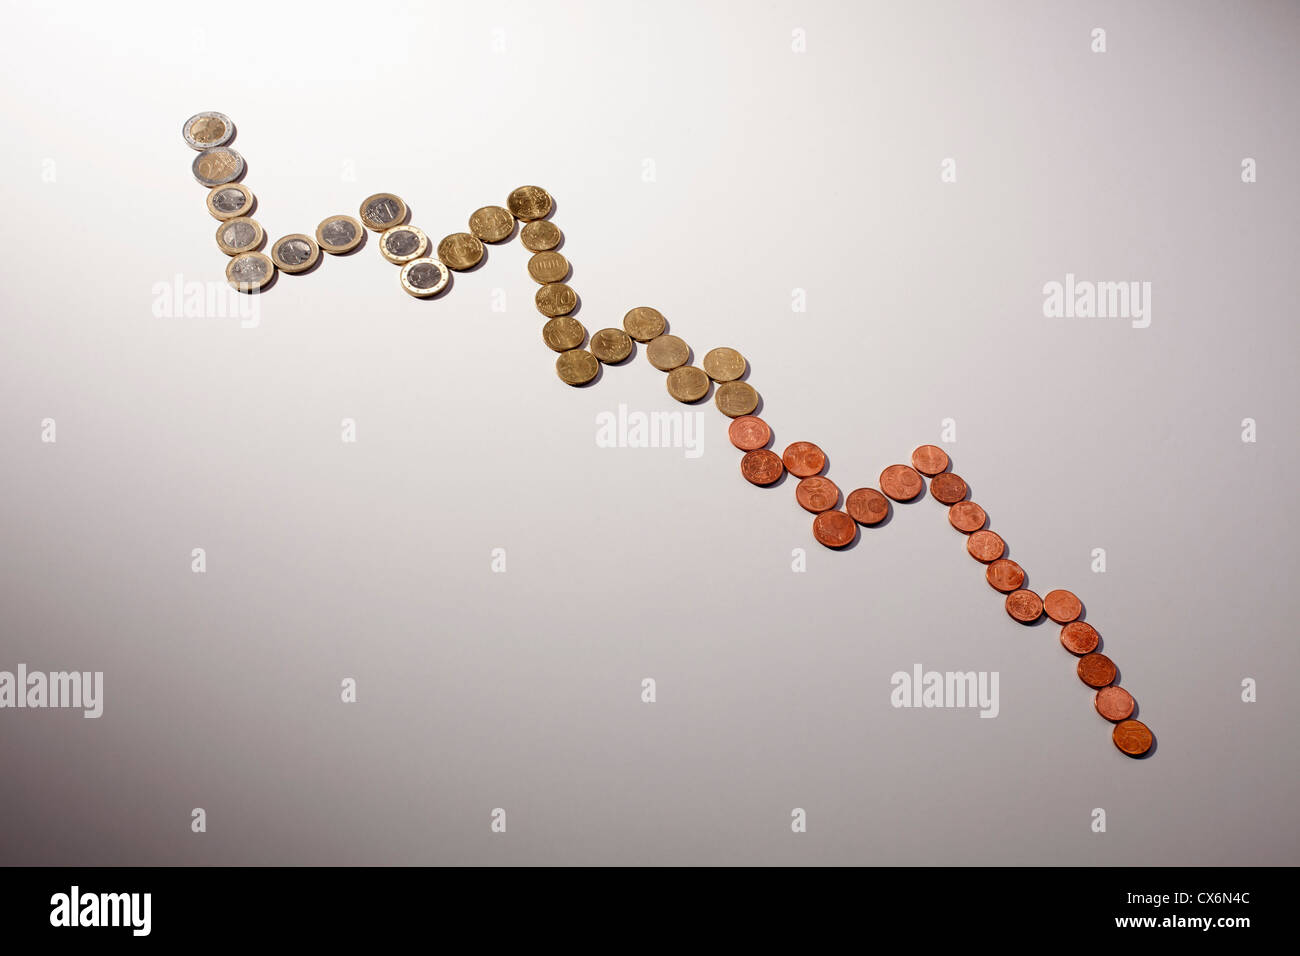 European Union coins arranged in a decreasing line graph Stock Photo